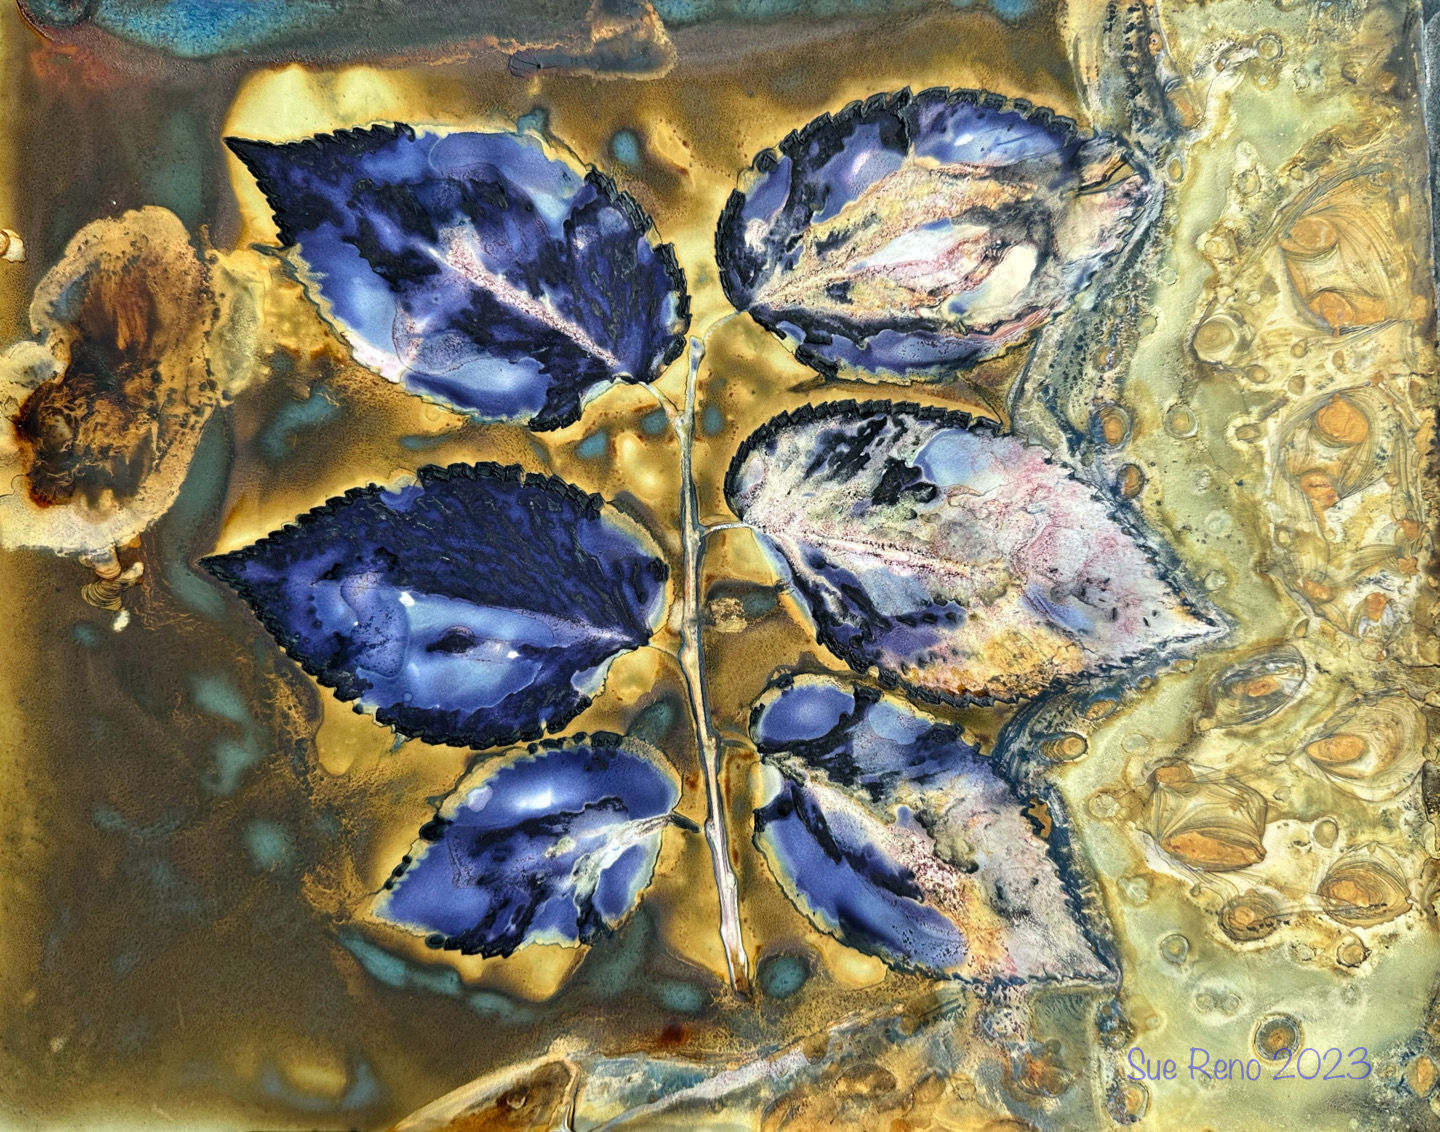 Sue Reno Studio - More wet cyanotype prints on mineral